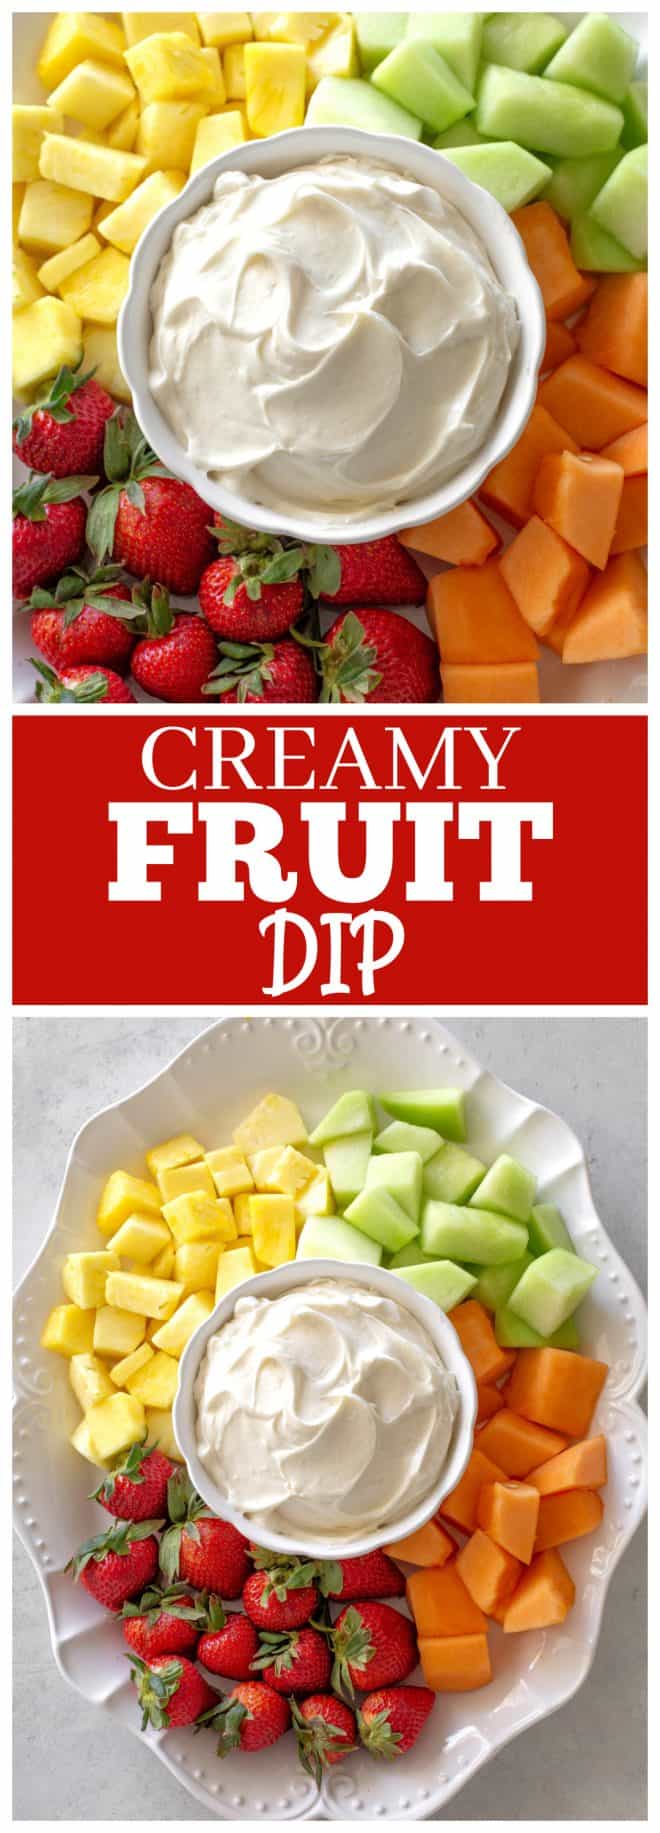 strawberries, pineapple, canteloupe, honey dew with cream dip.